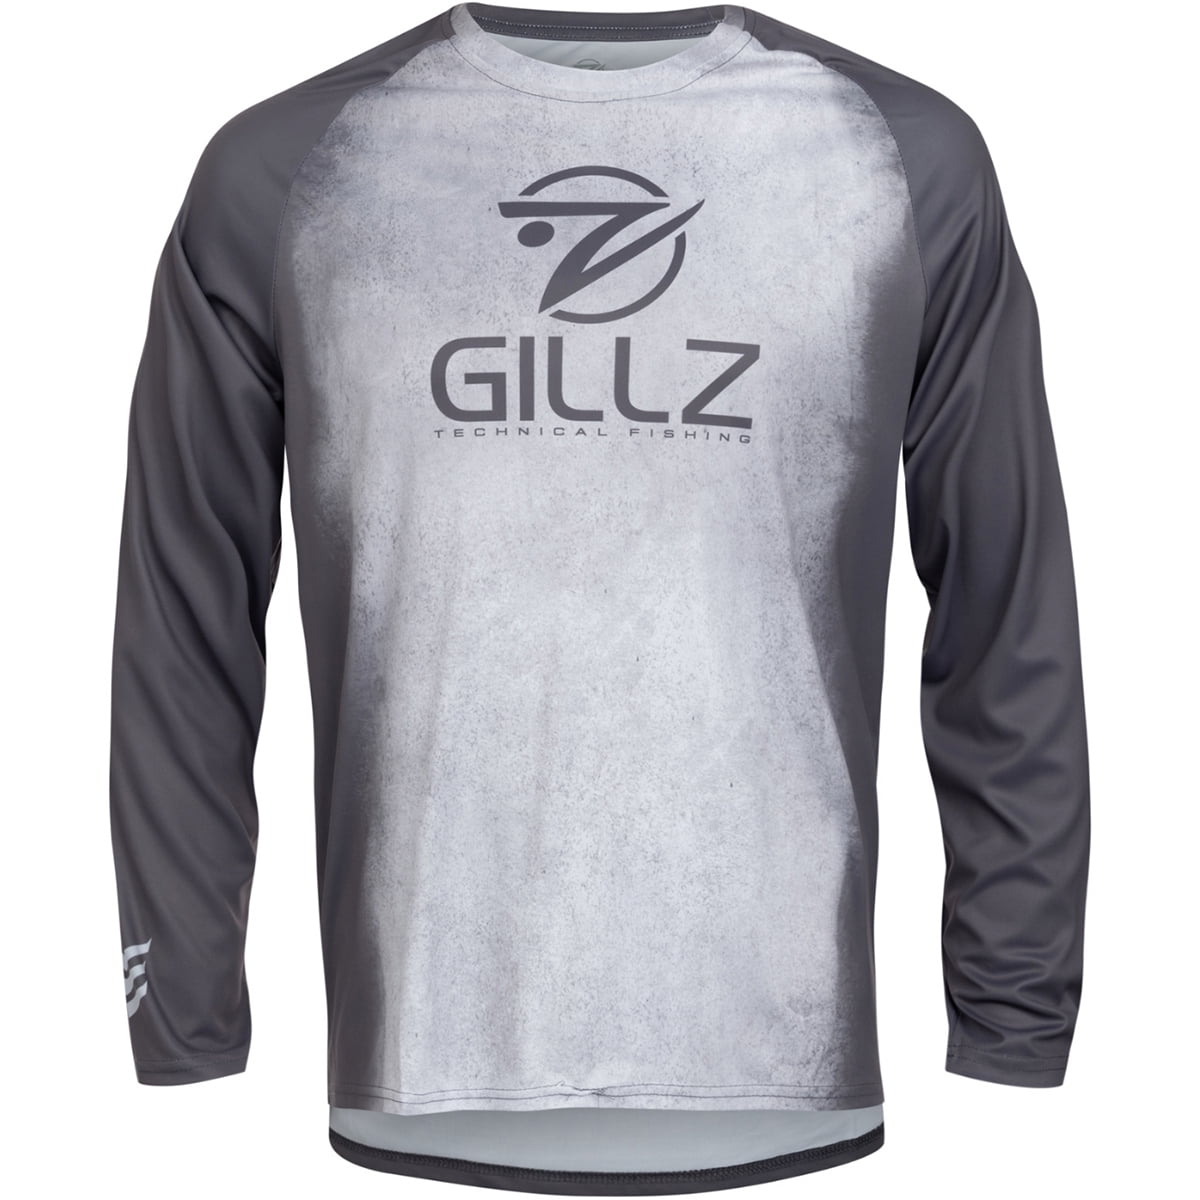 Gillz Contender Series GWS UV Long Sleeve T-Shirt - Small - Glacier Gray 